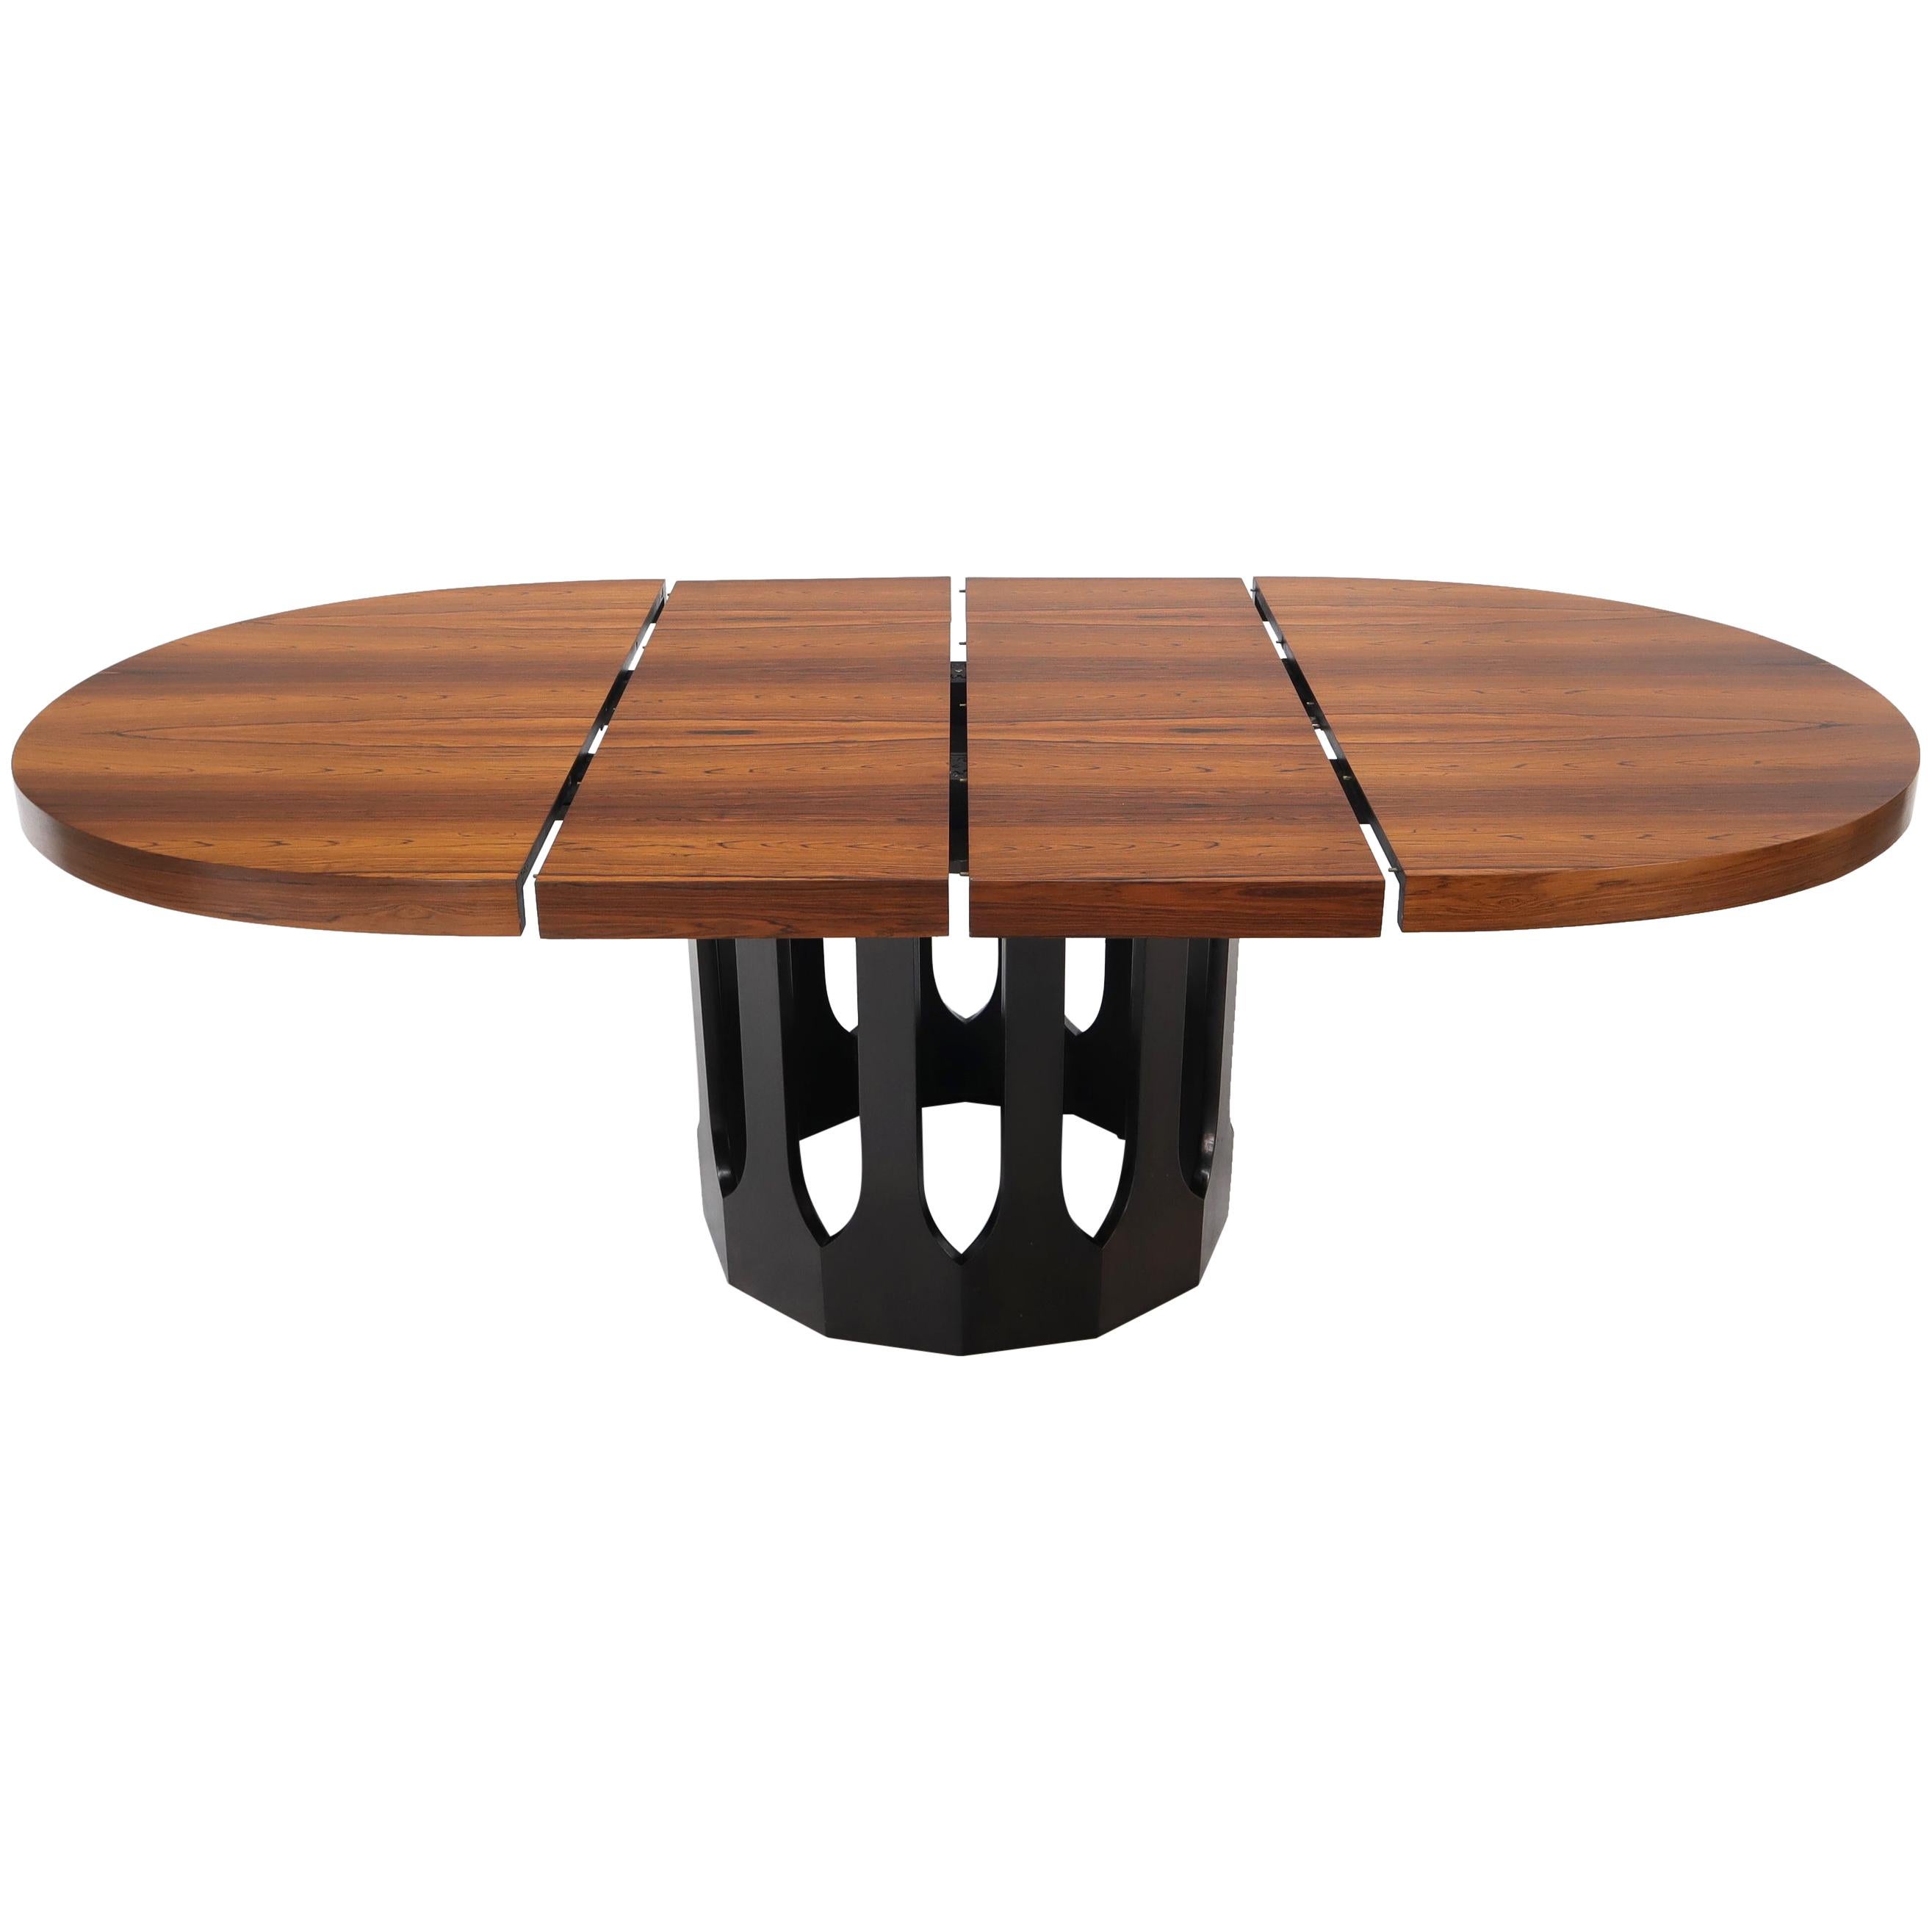 Oval Rosewood Ebonized Solid Mahogany Base Dining Table by Harvey Probber 2 Leaf